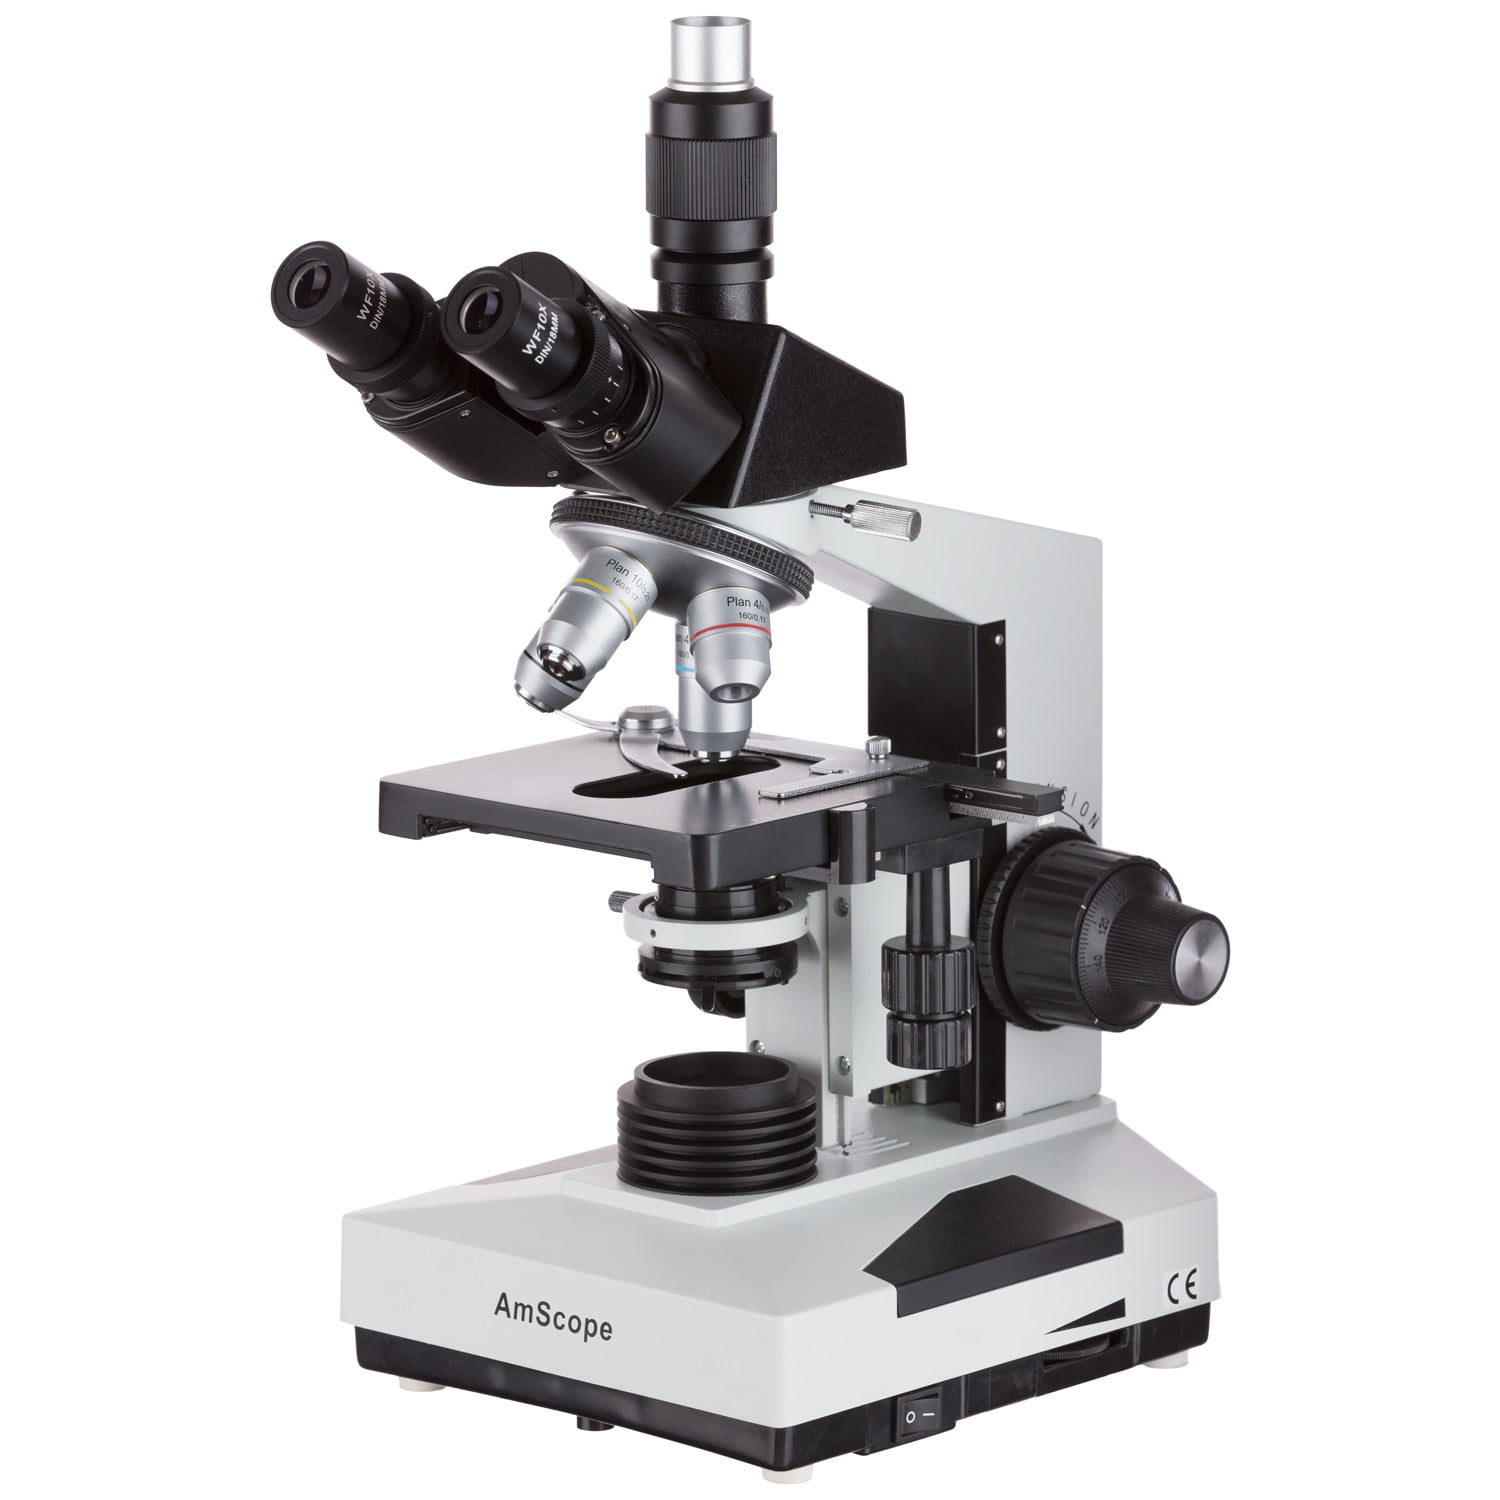 AmScope X X Lab Clinic Vet Trinocular Microscope With Plan Achromatic Objectives New